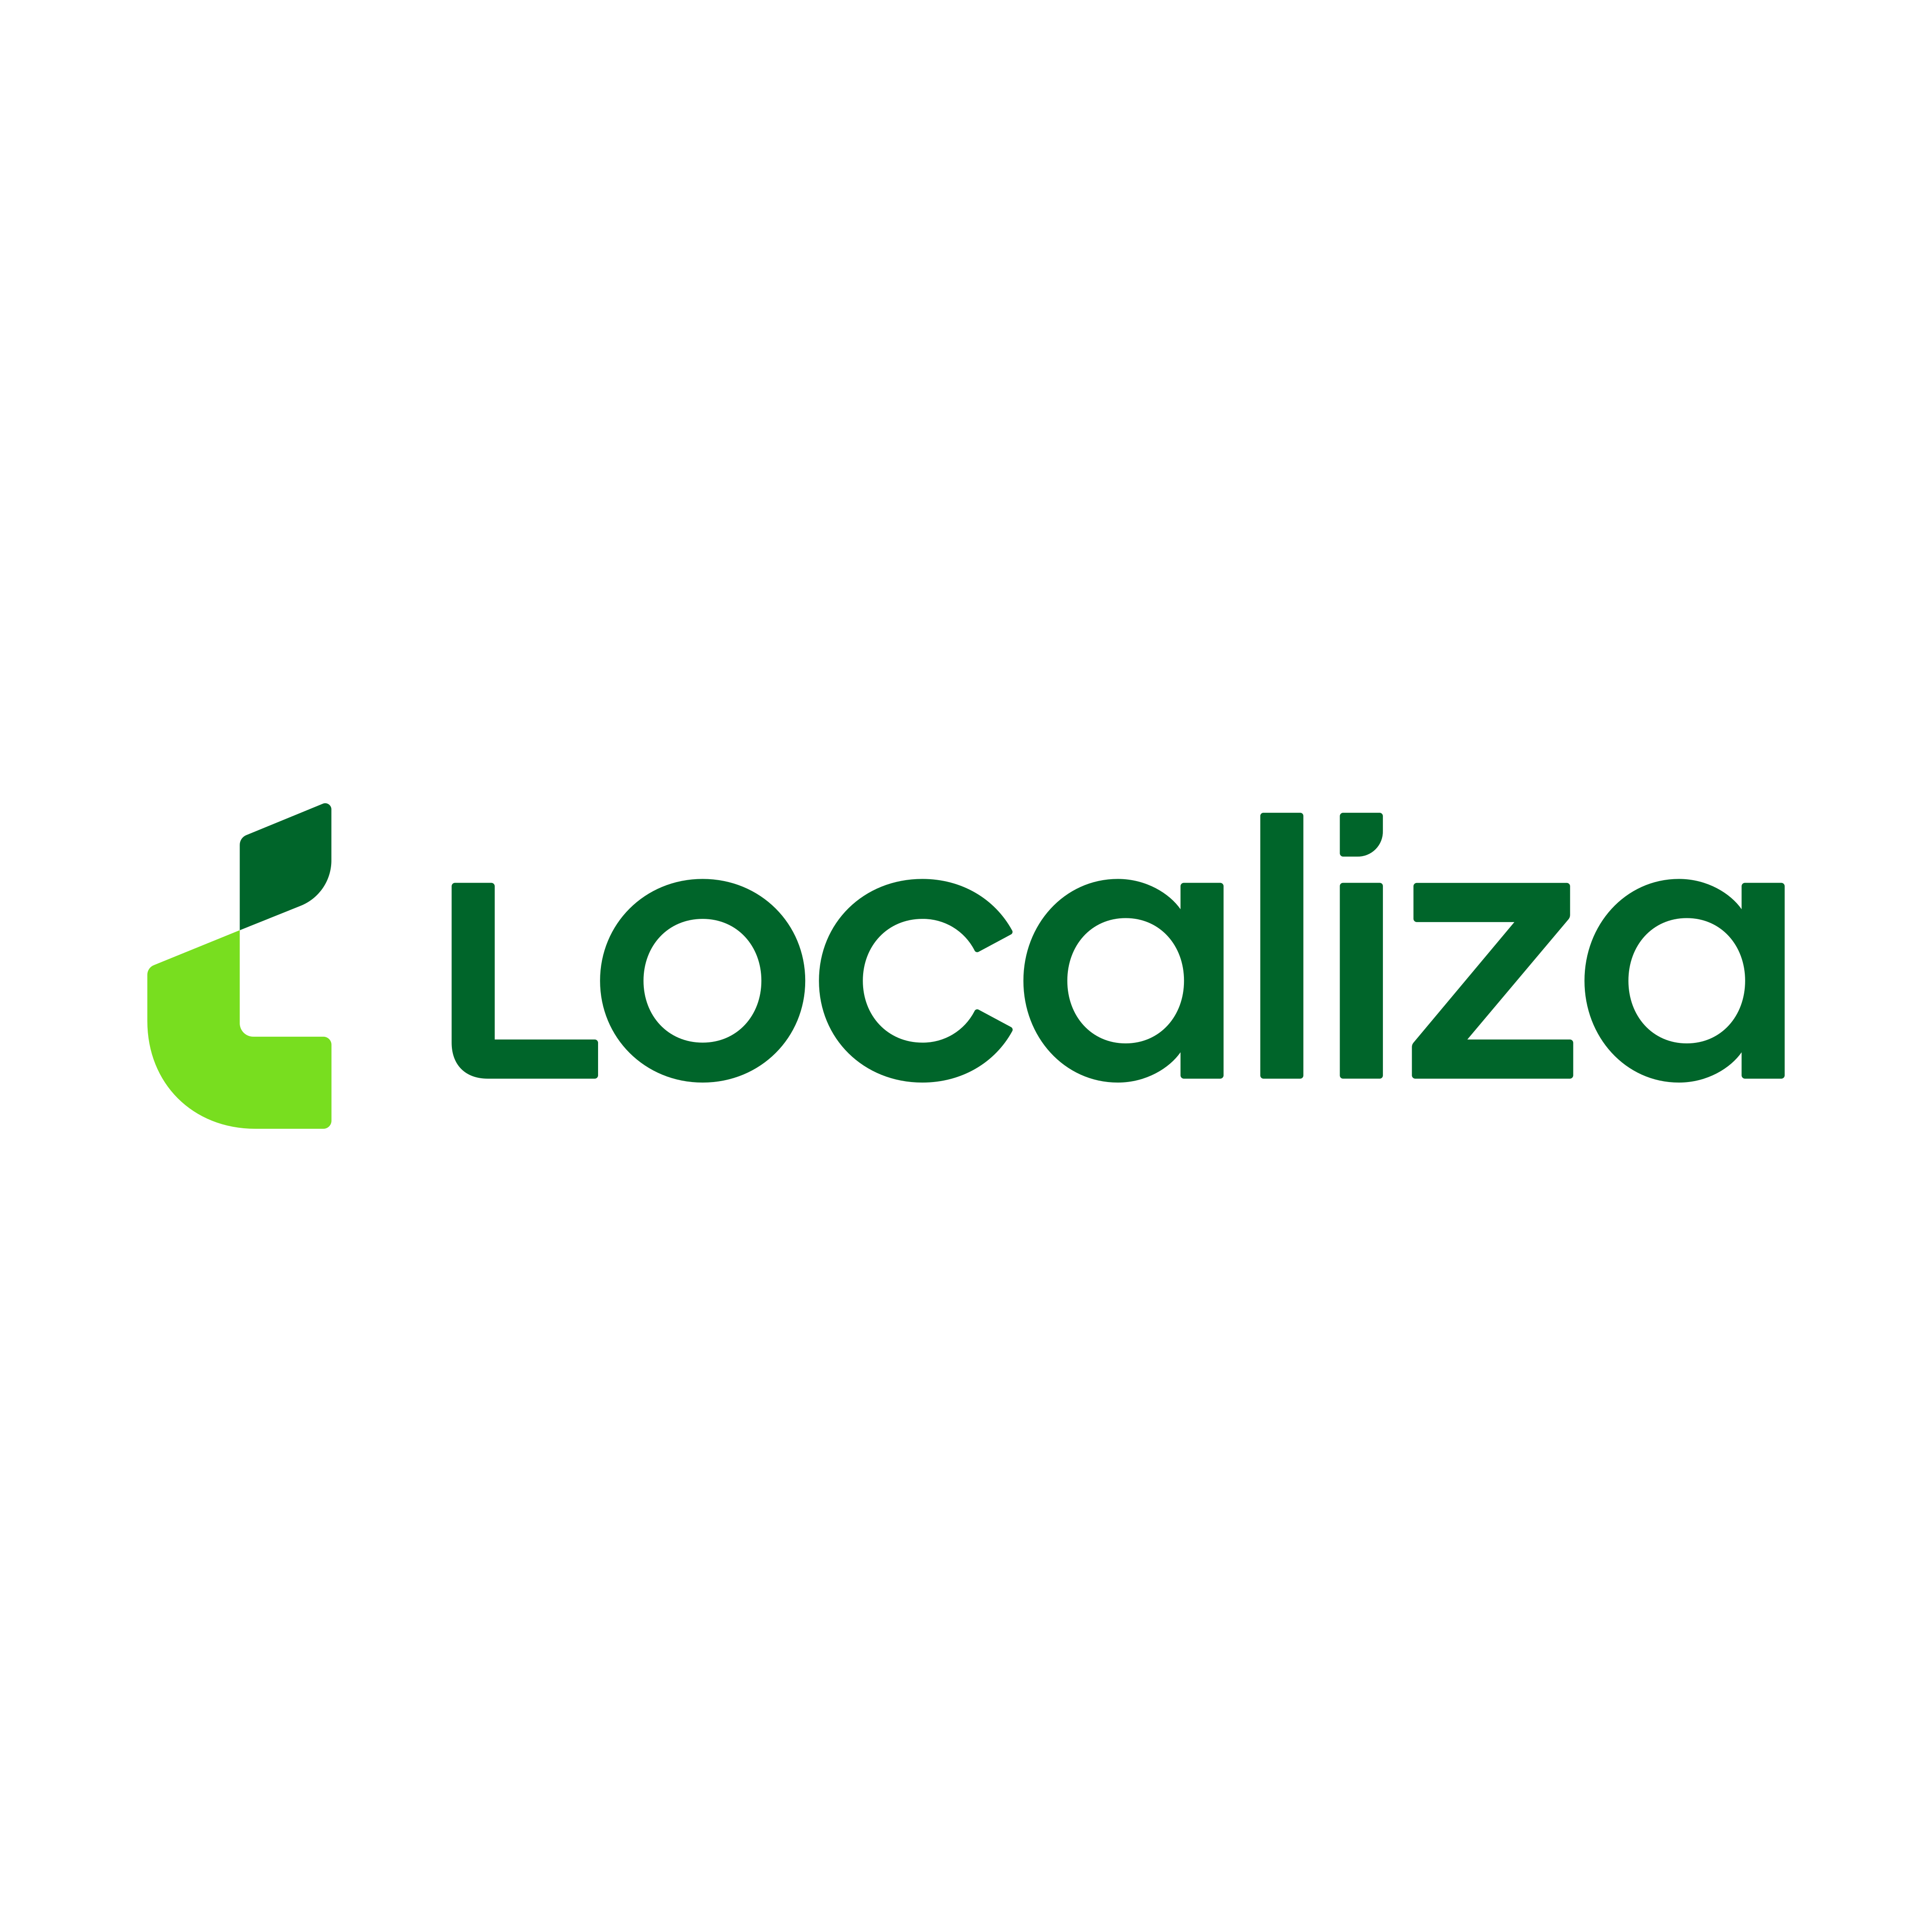 Localiza Logo PNG.